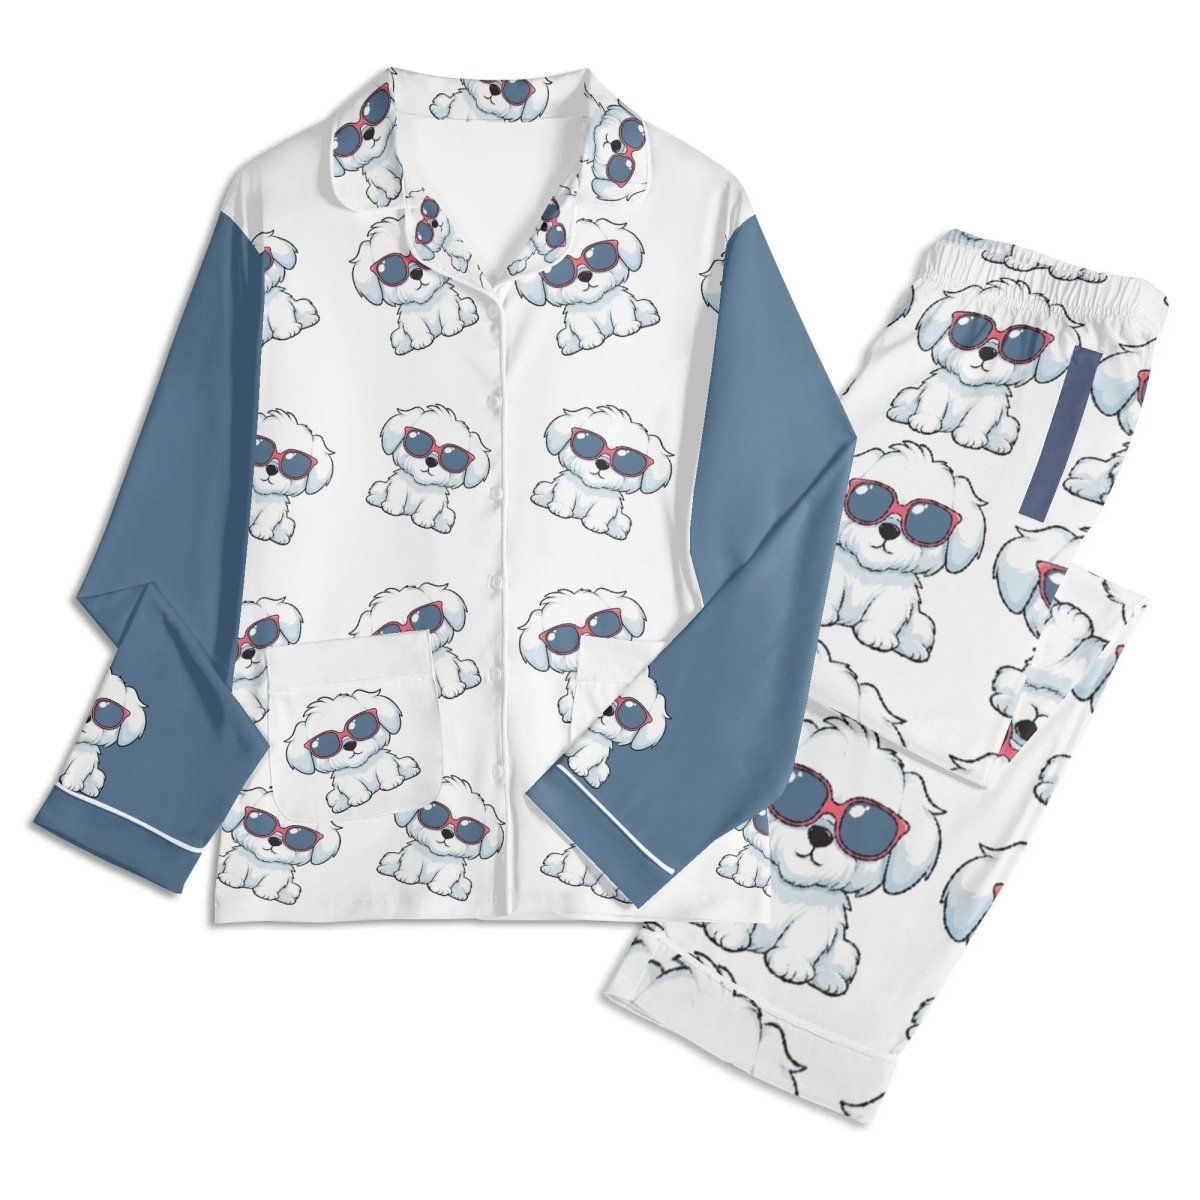 Customizable Hilarious Pajama Set - Iron Phoenix GHG